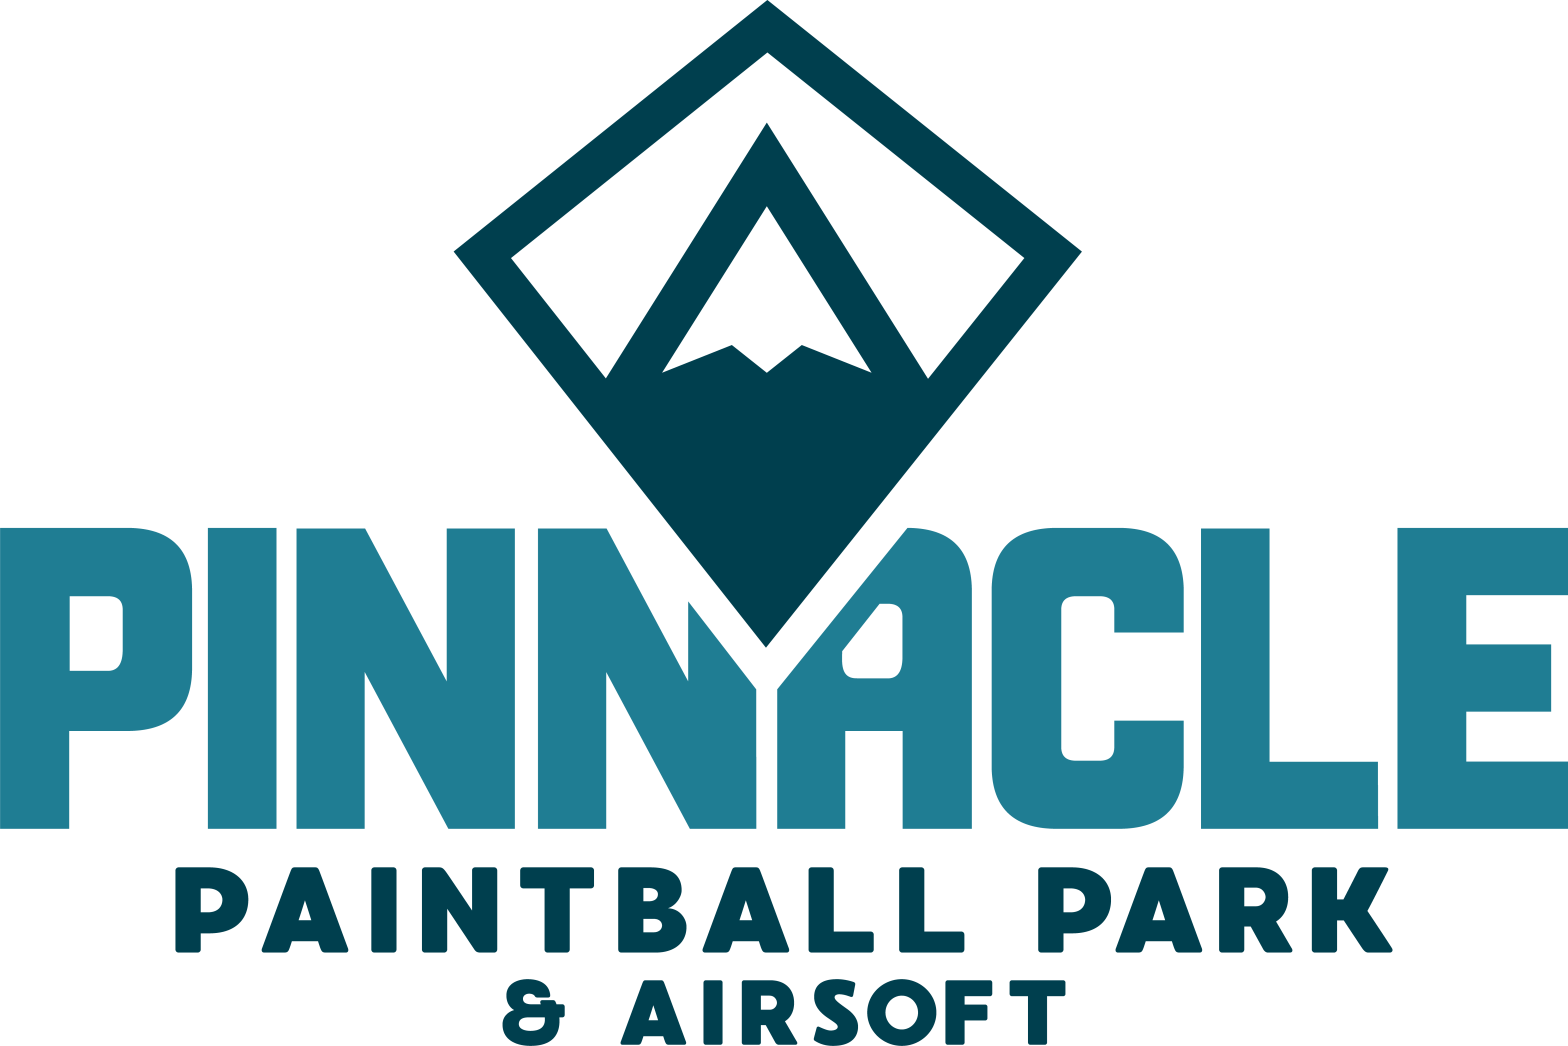 Pinnacle Paintball